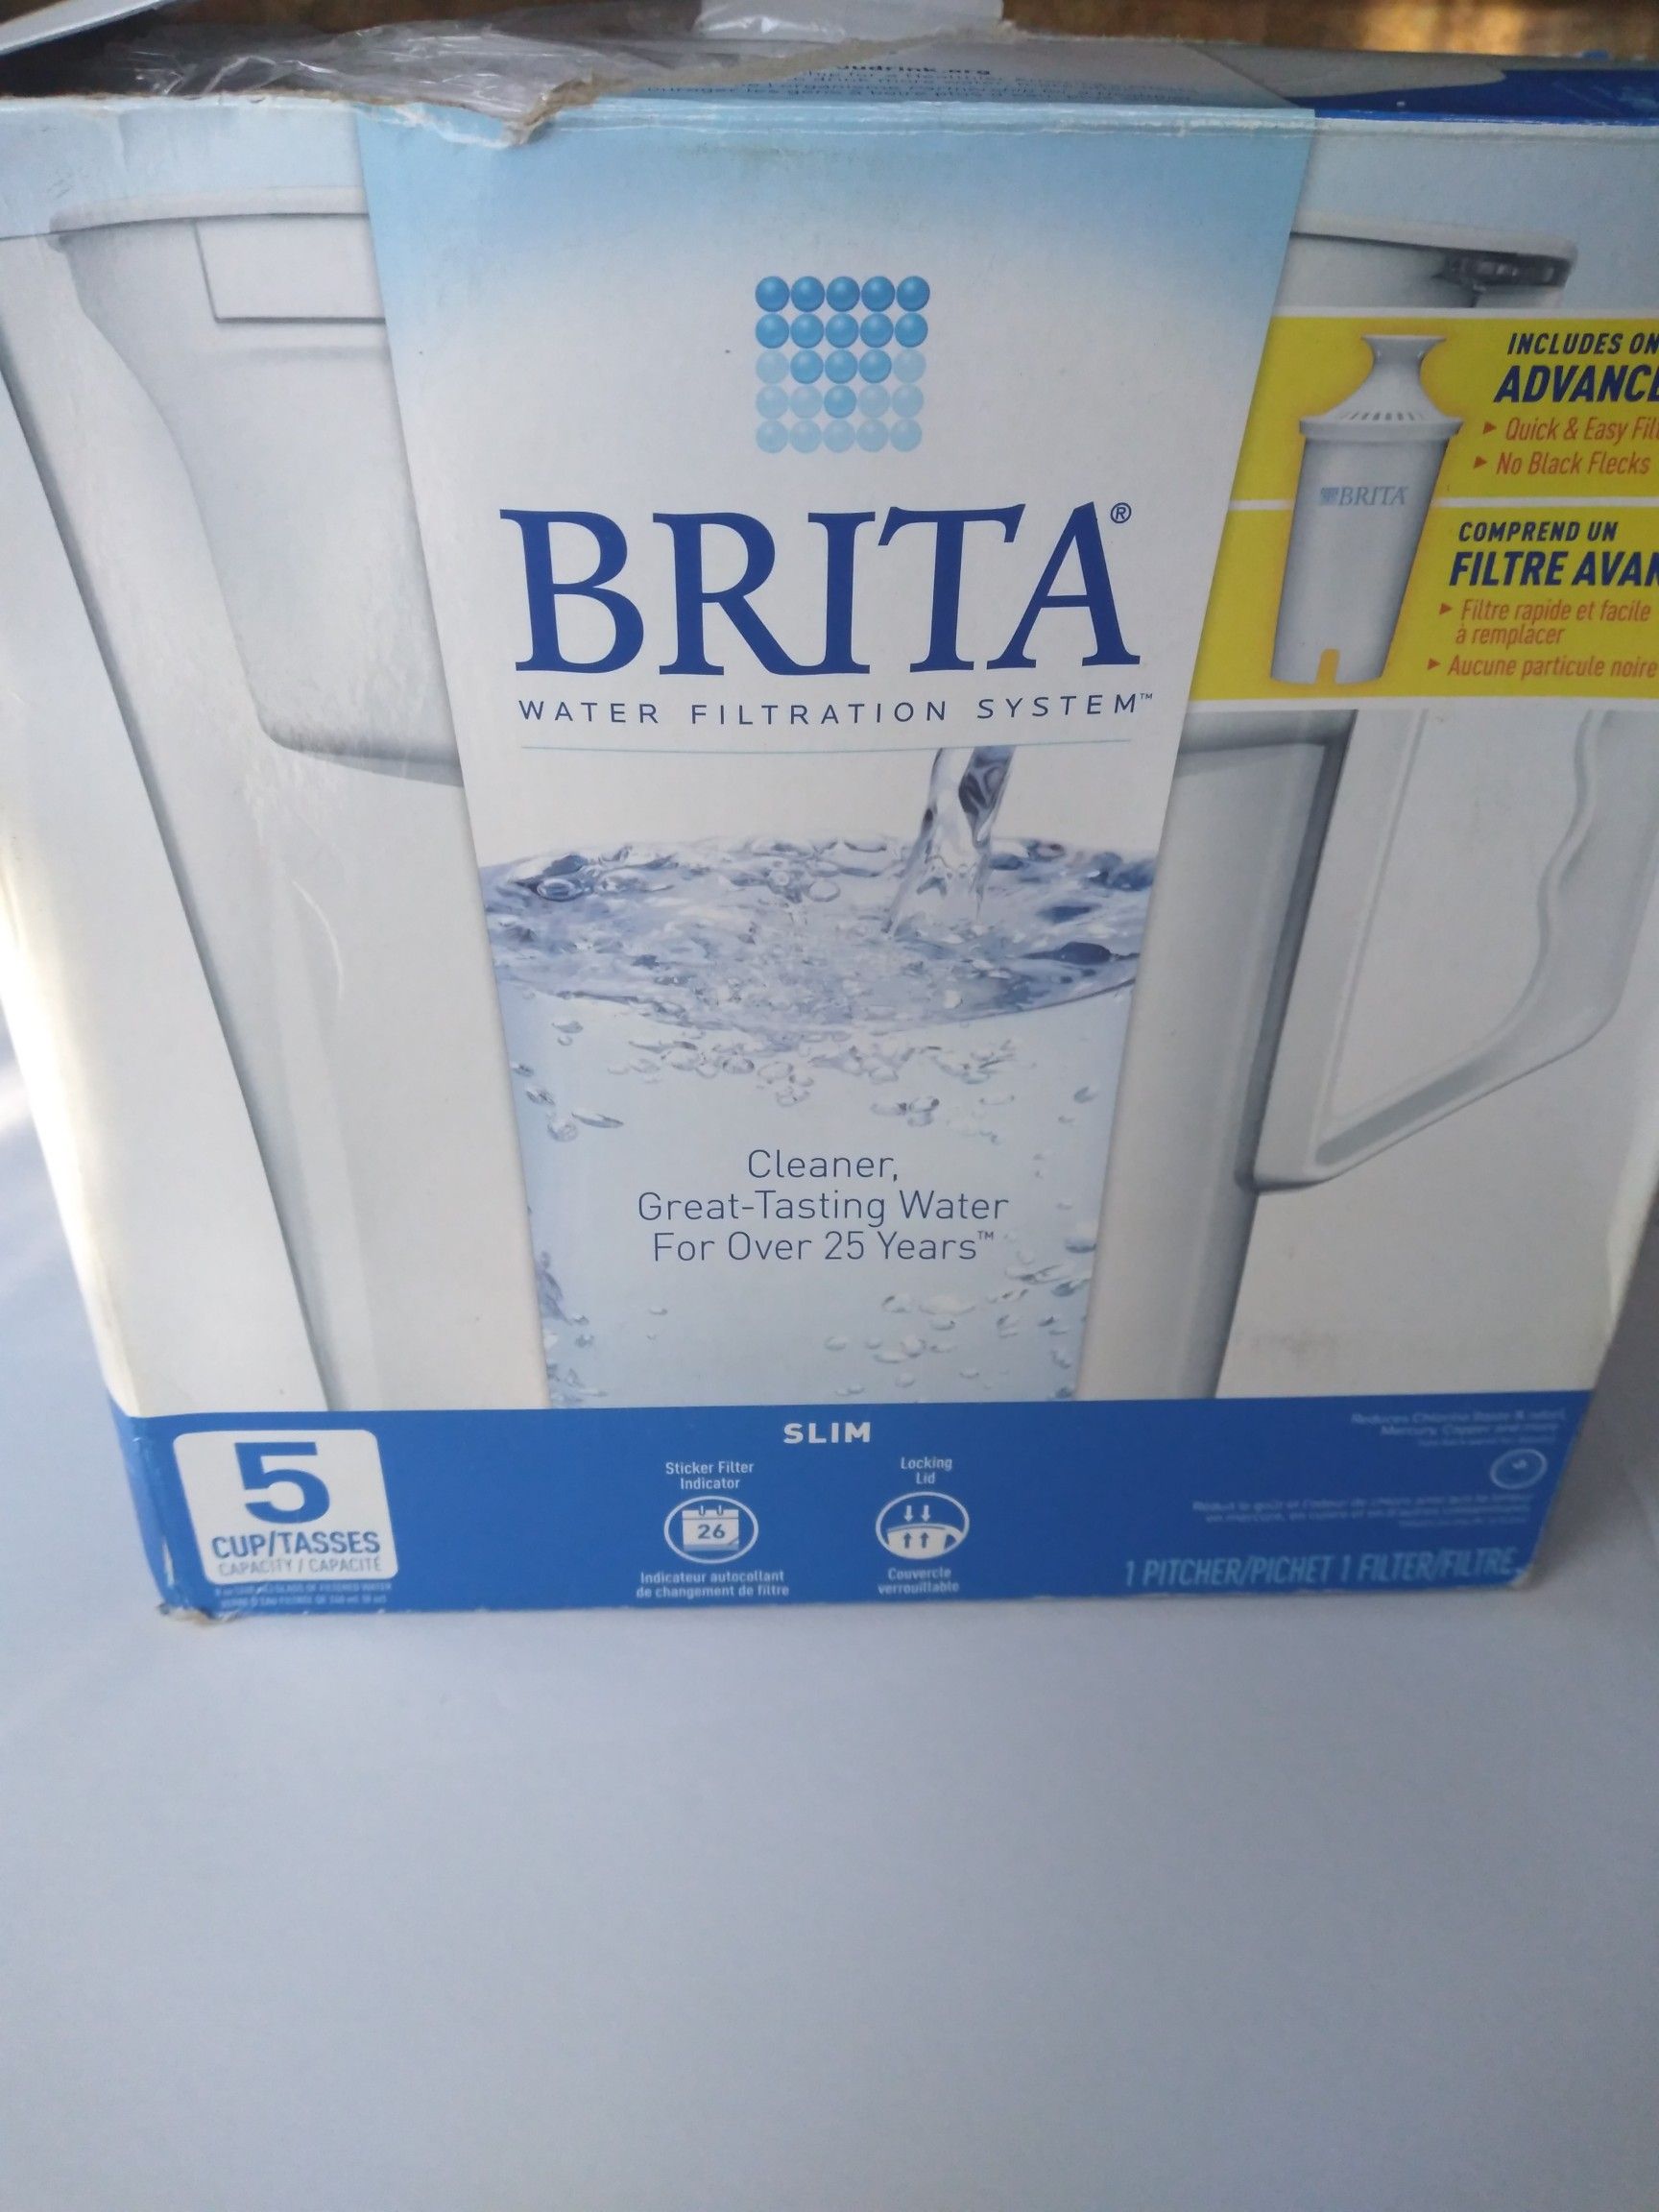 Brita water filtration system